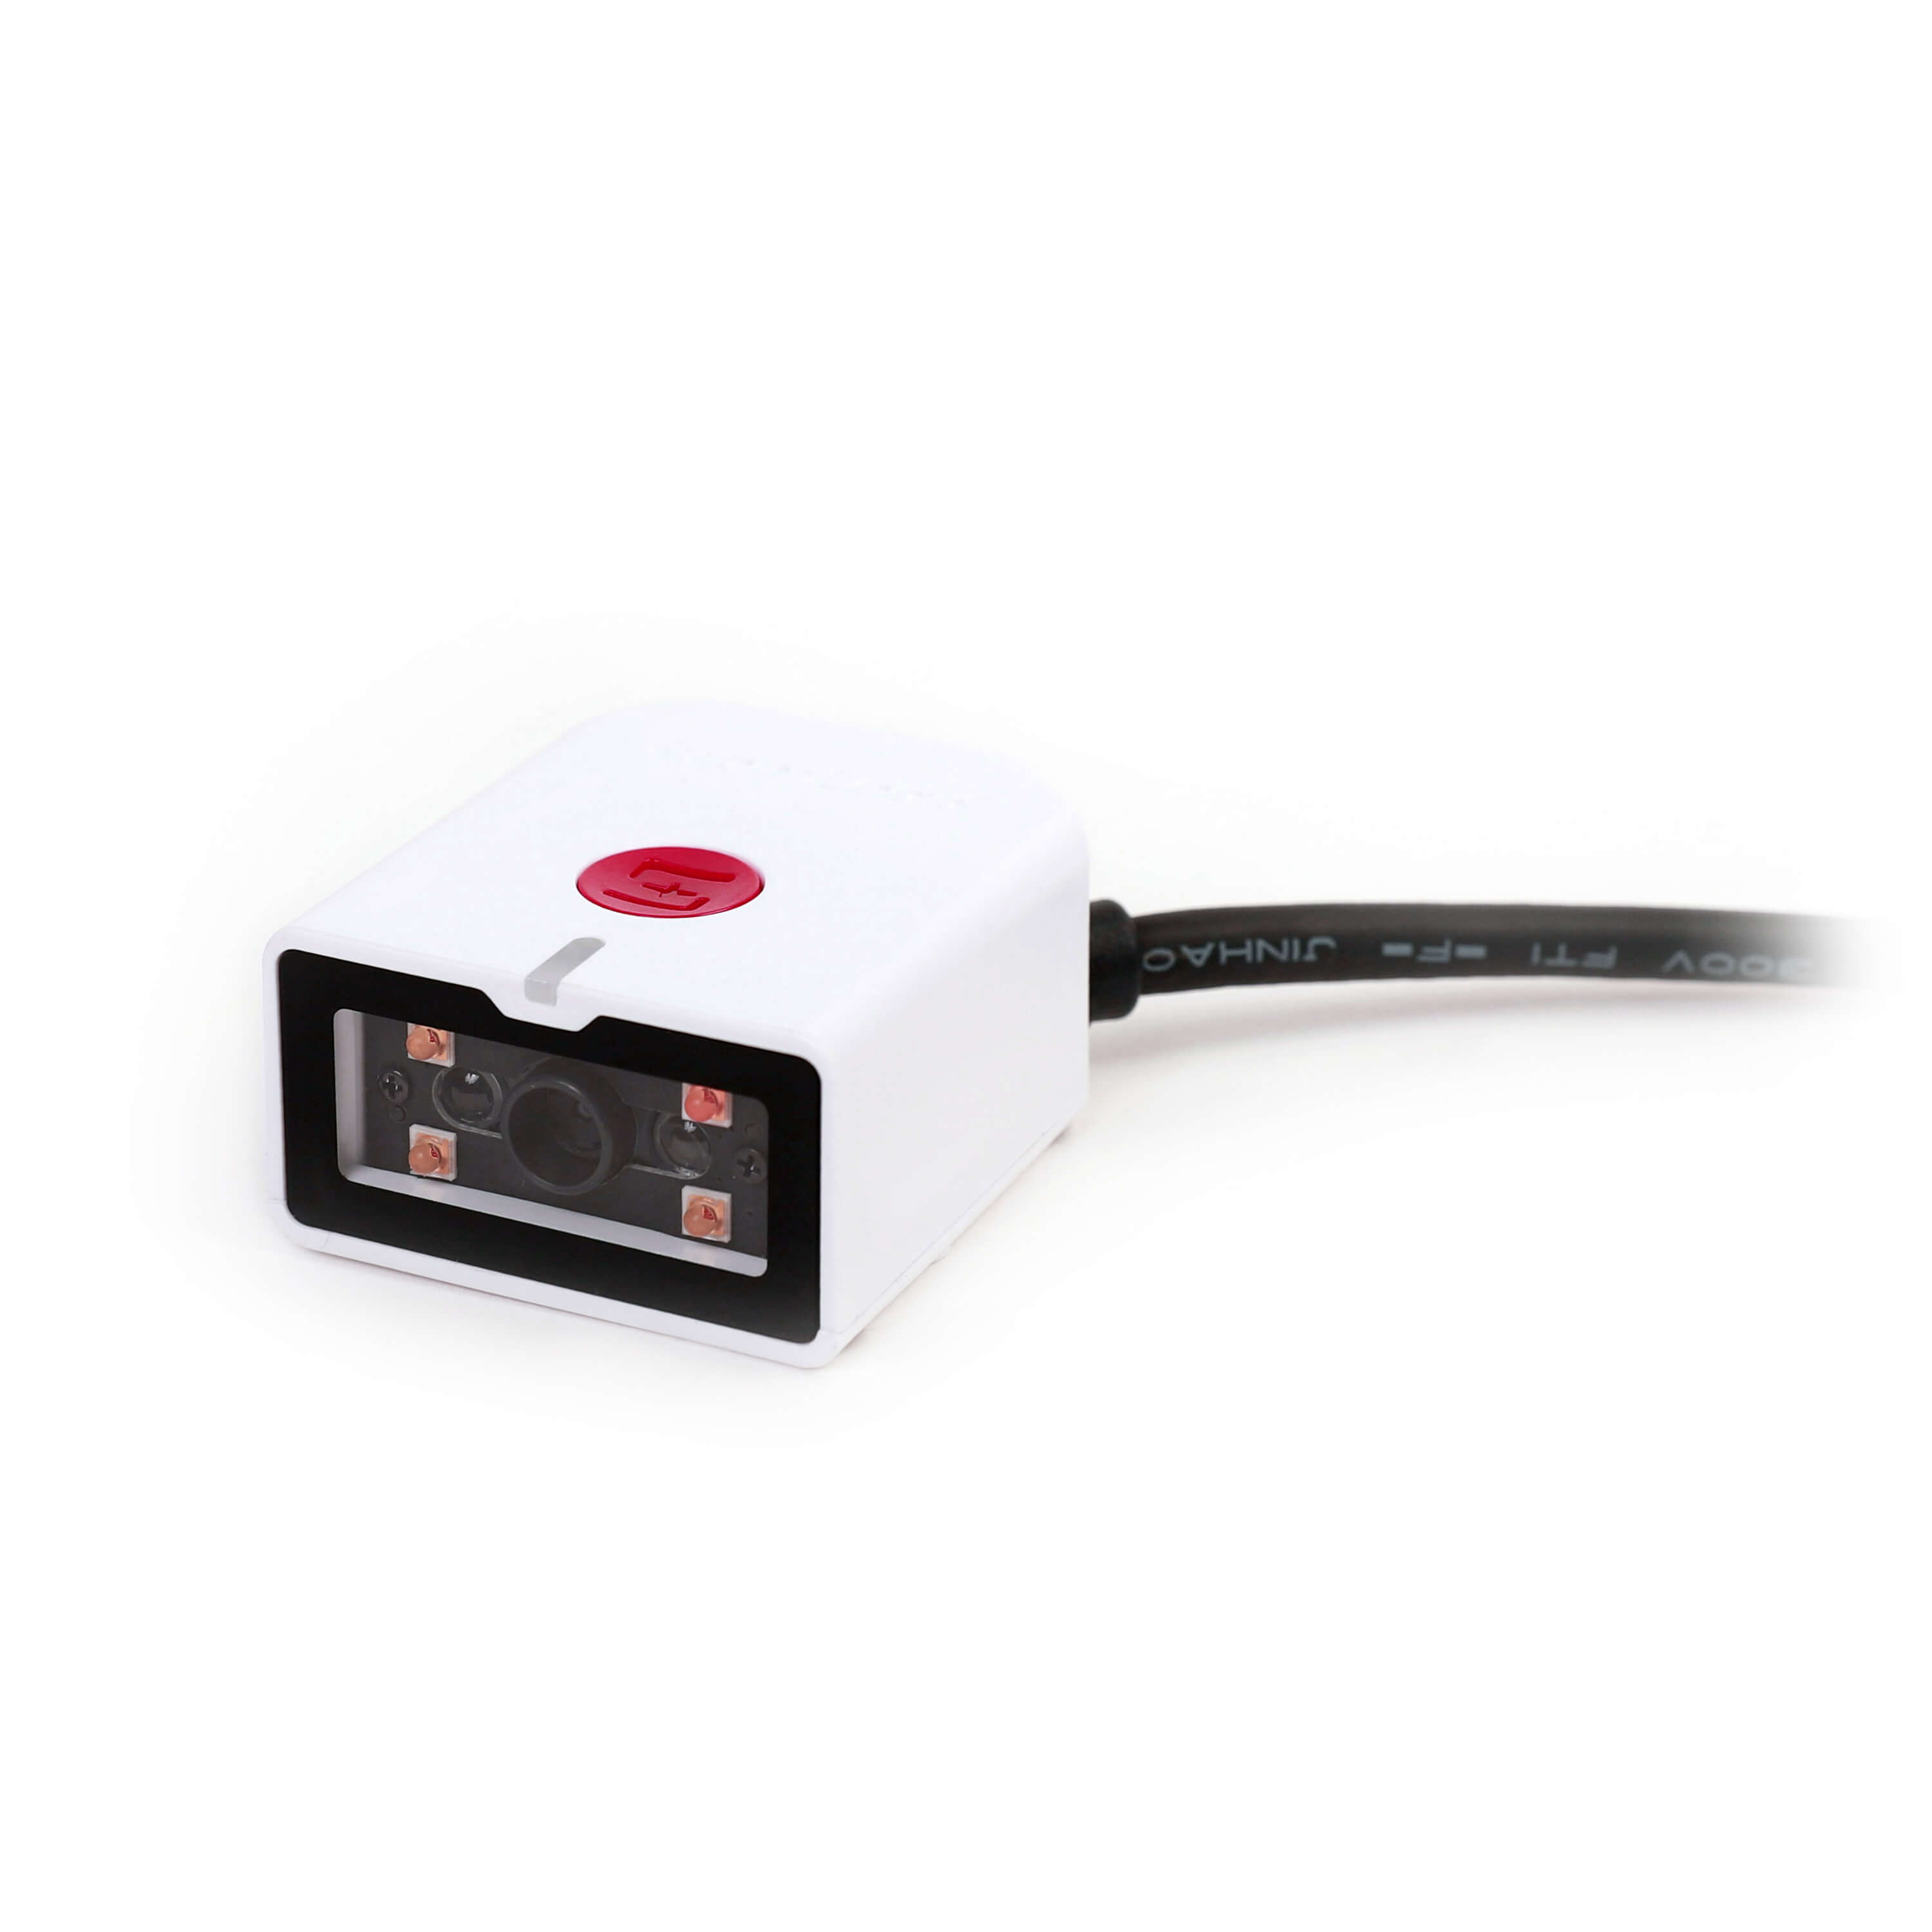 Сканер штрих-кода MERTECH N200 industrial P2D USB